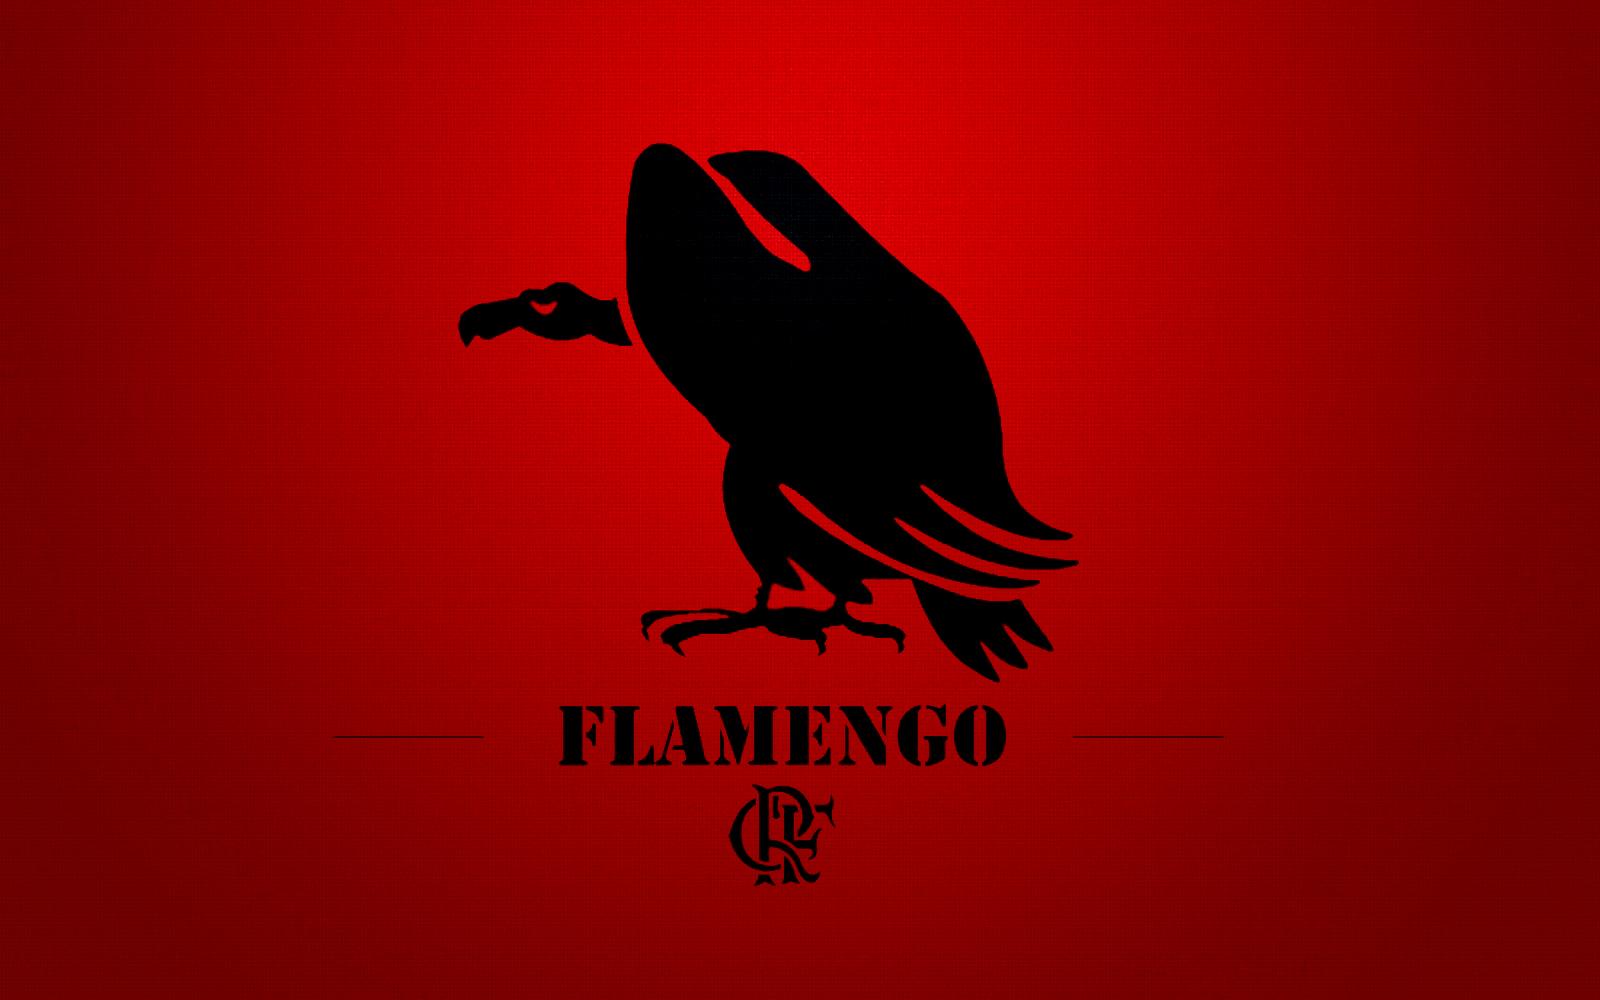 Clube De Regatas Do Flamengo at 750 x 1334 iPhone 6 size wallpapers HD quality